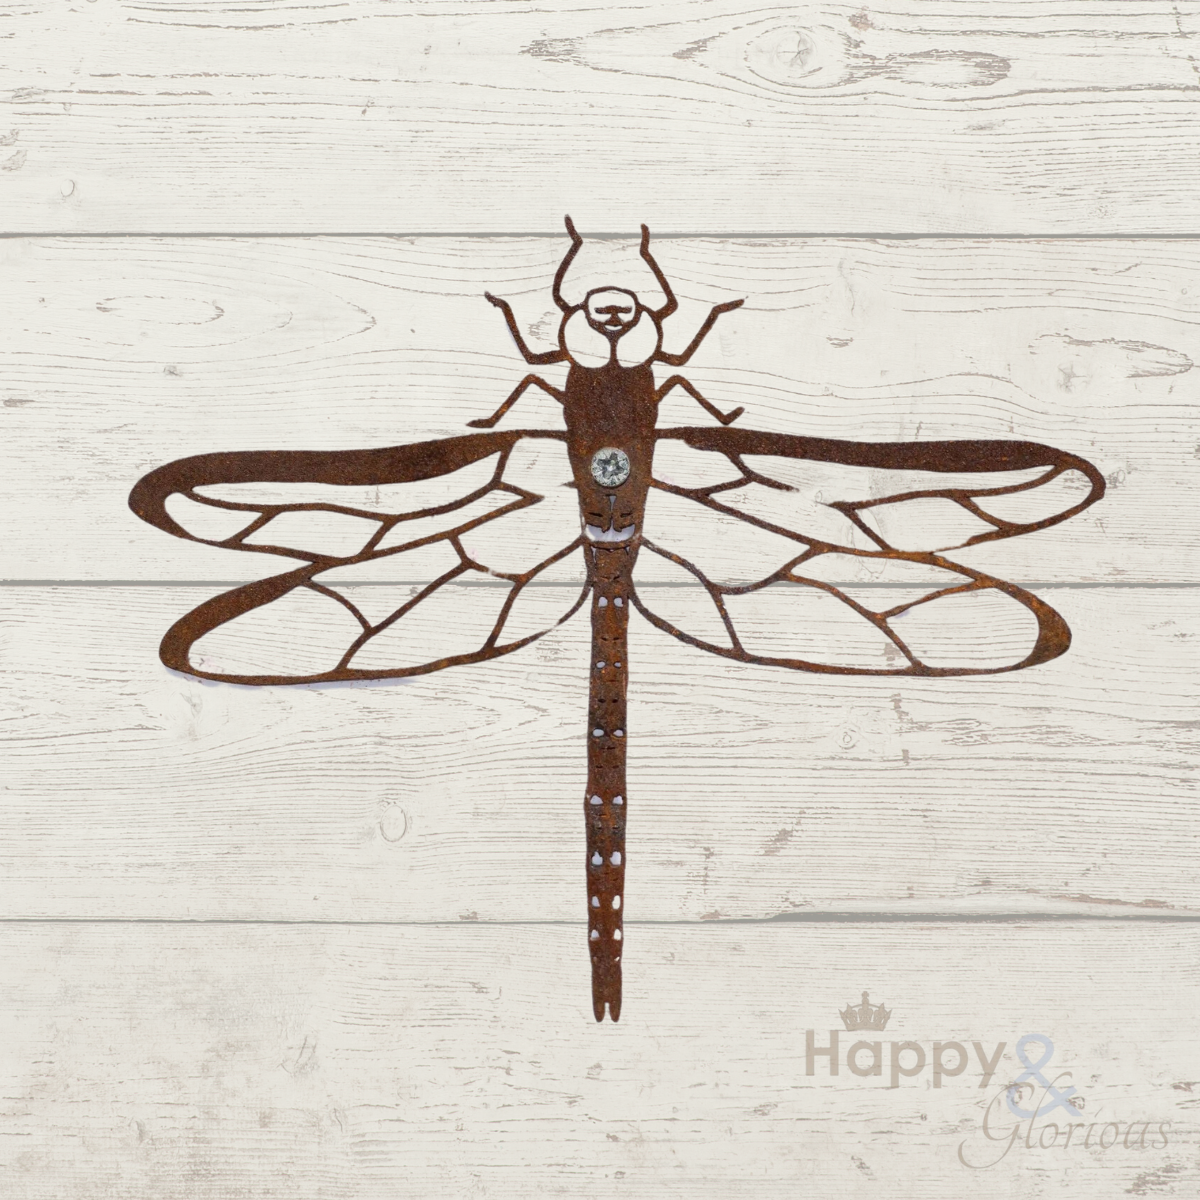 Steel dragonfly silhouette garden art